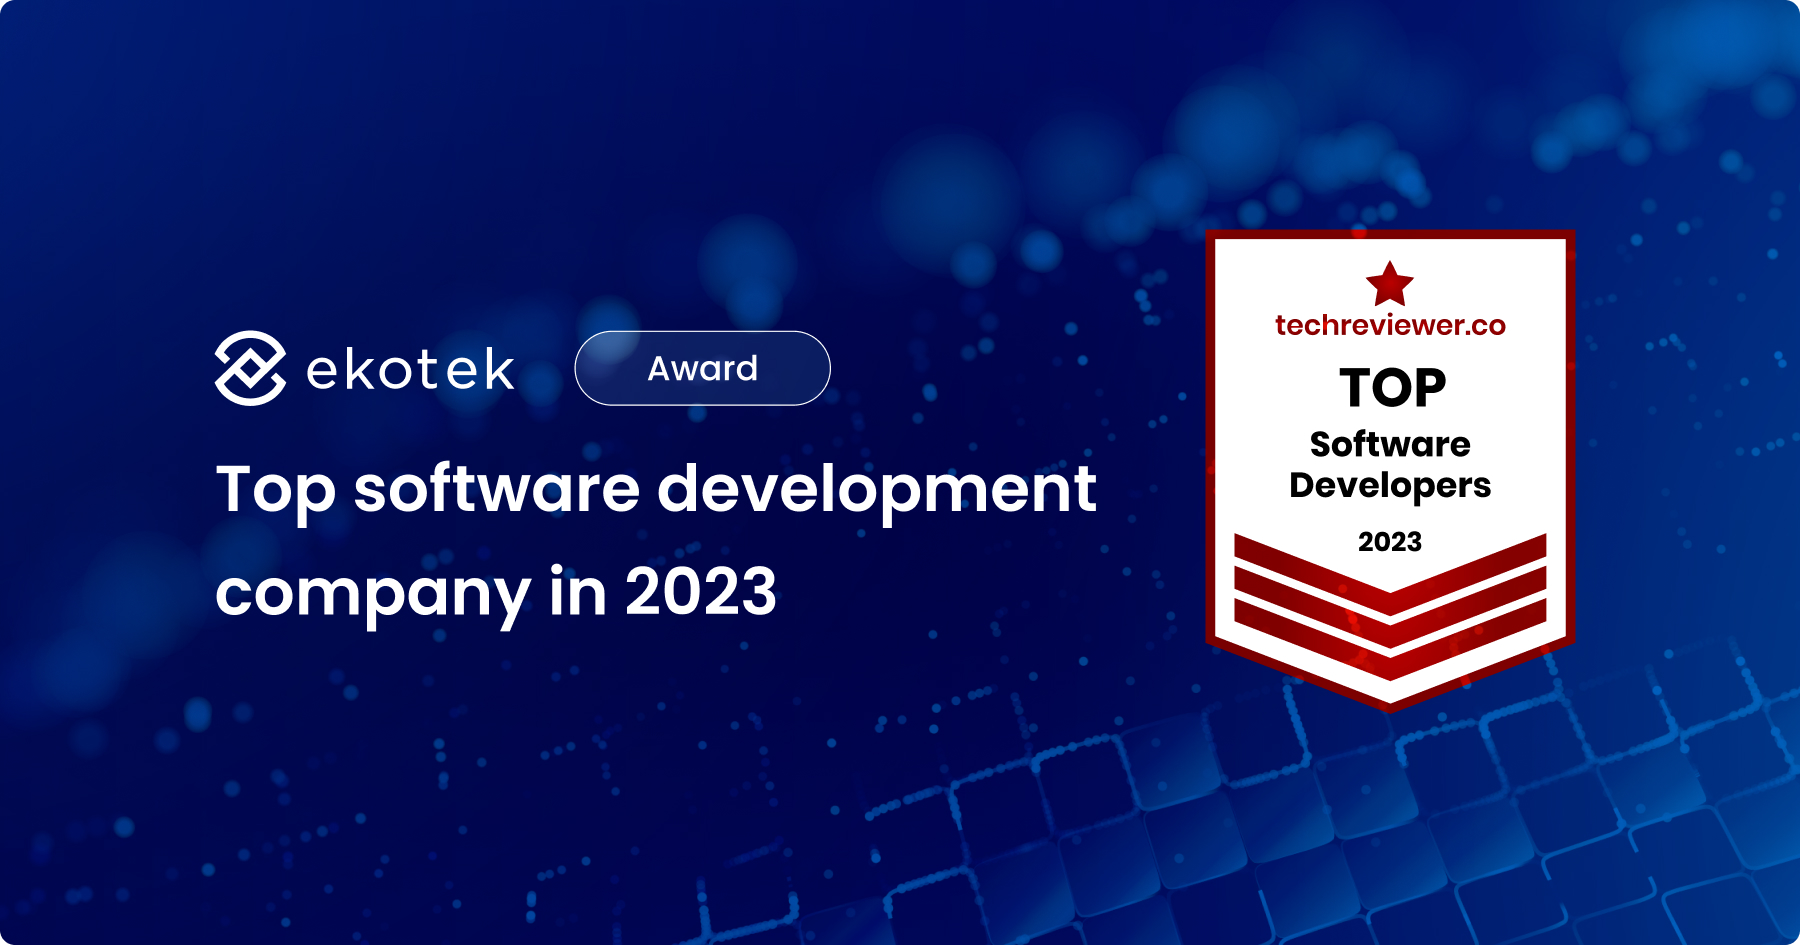 Ekotek makes the list of top software development companies in 2023